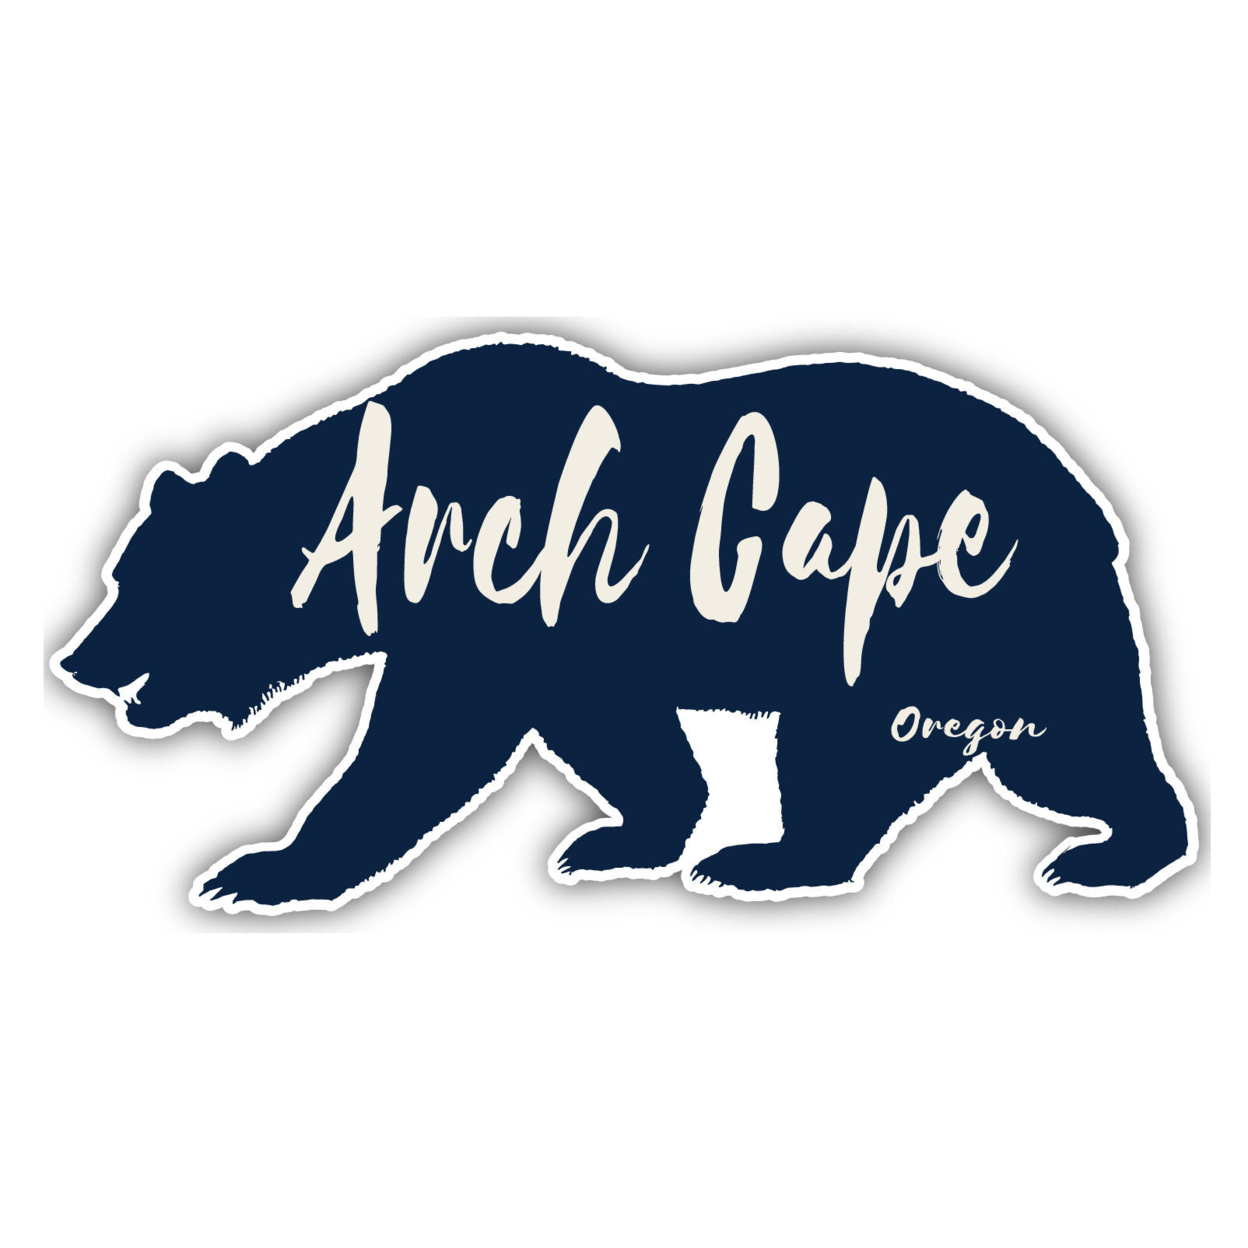 Arch Cape Oregon Souvenir Decorative Stickers (Choose Theme And Size) - Single Unit, 10-Inch, Bear